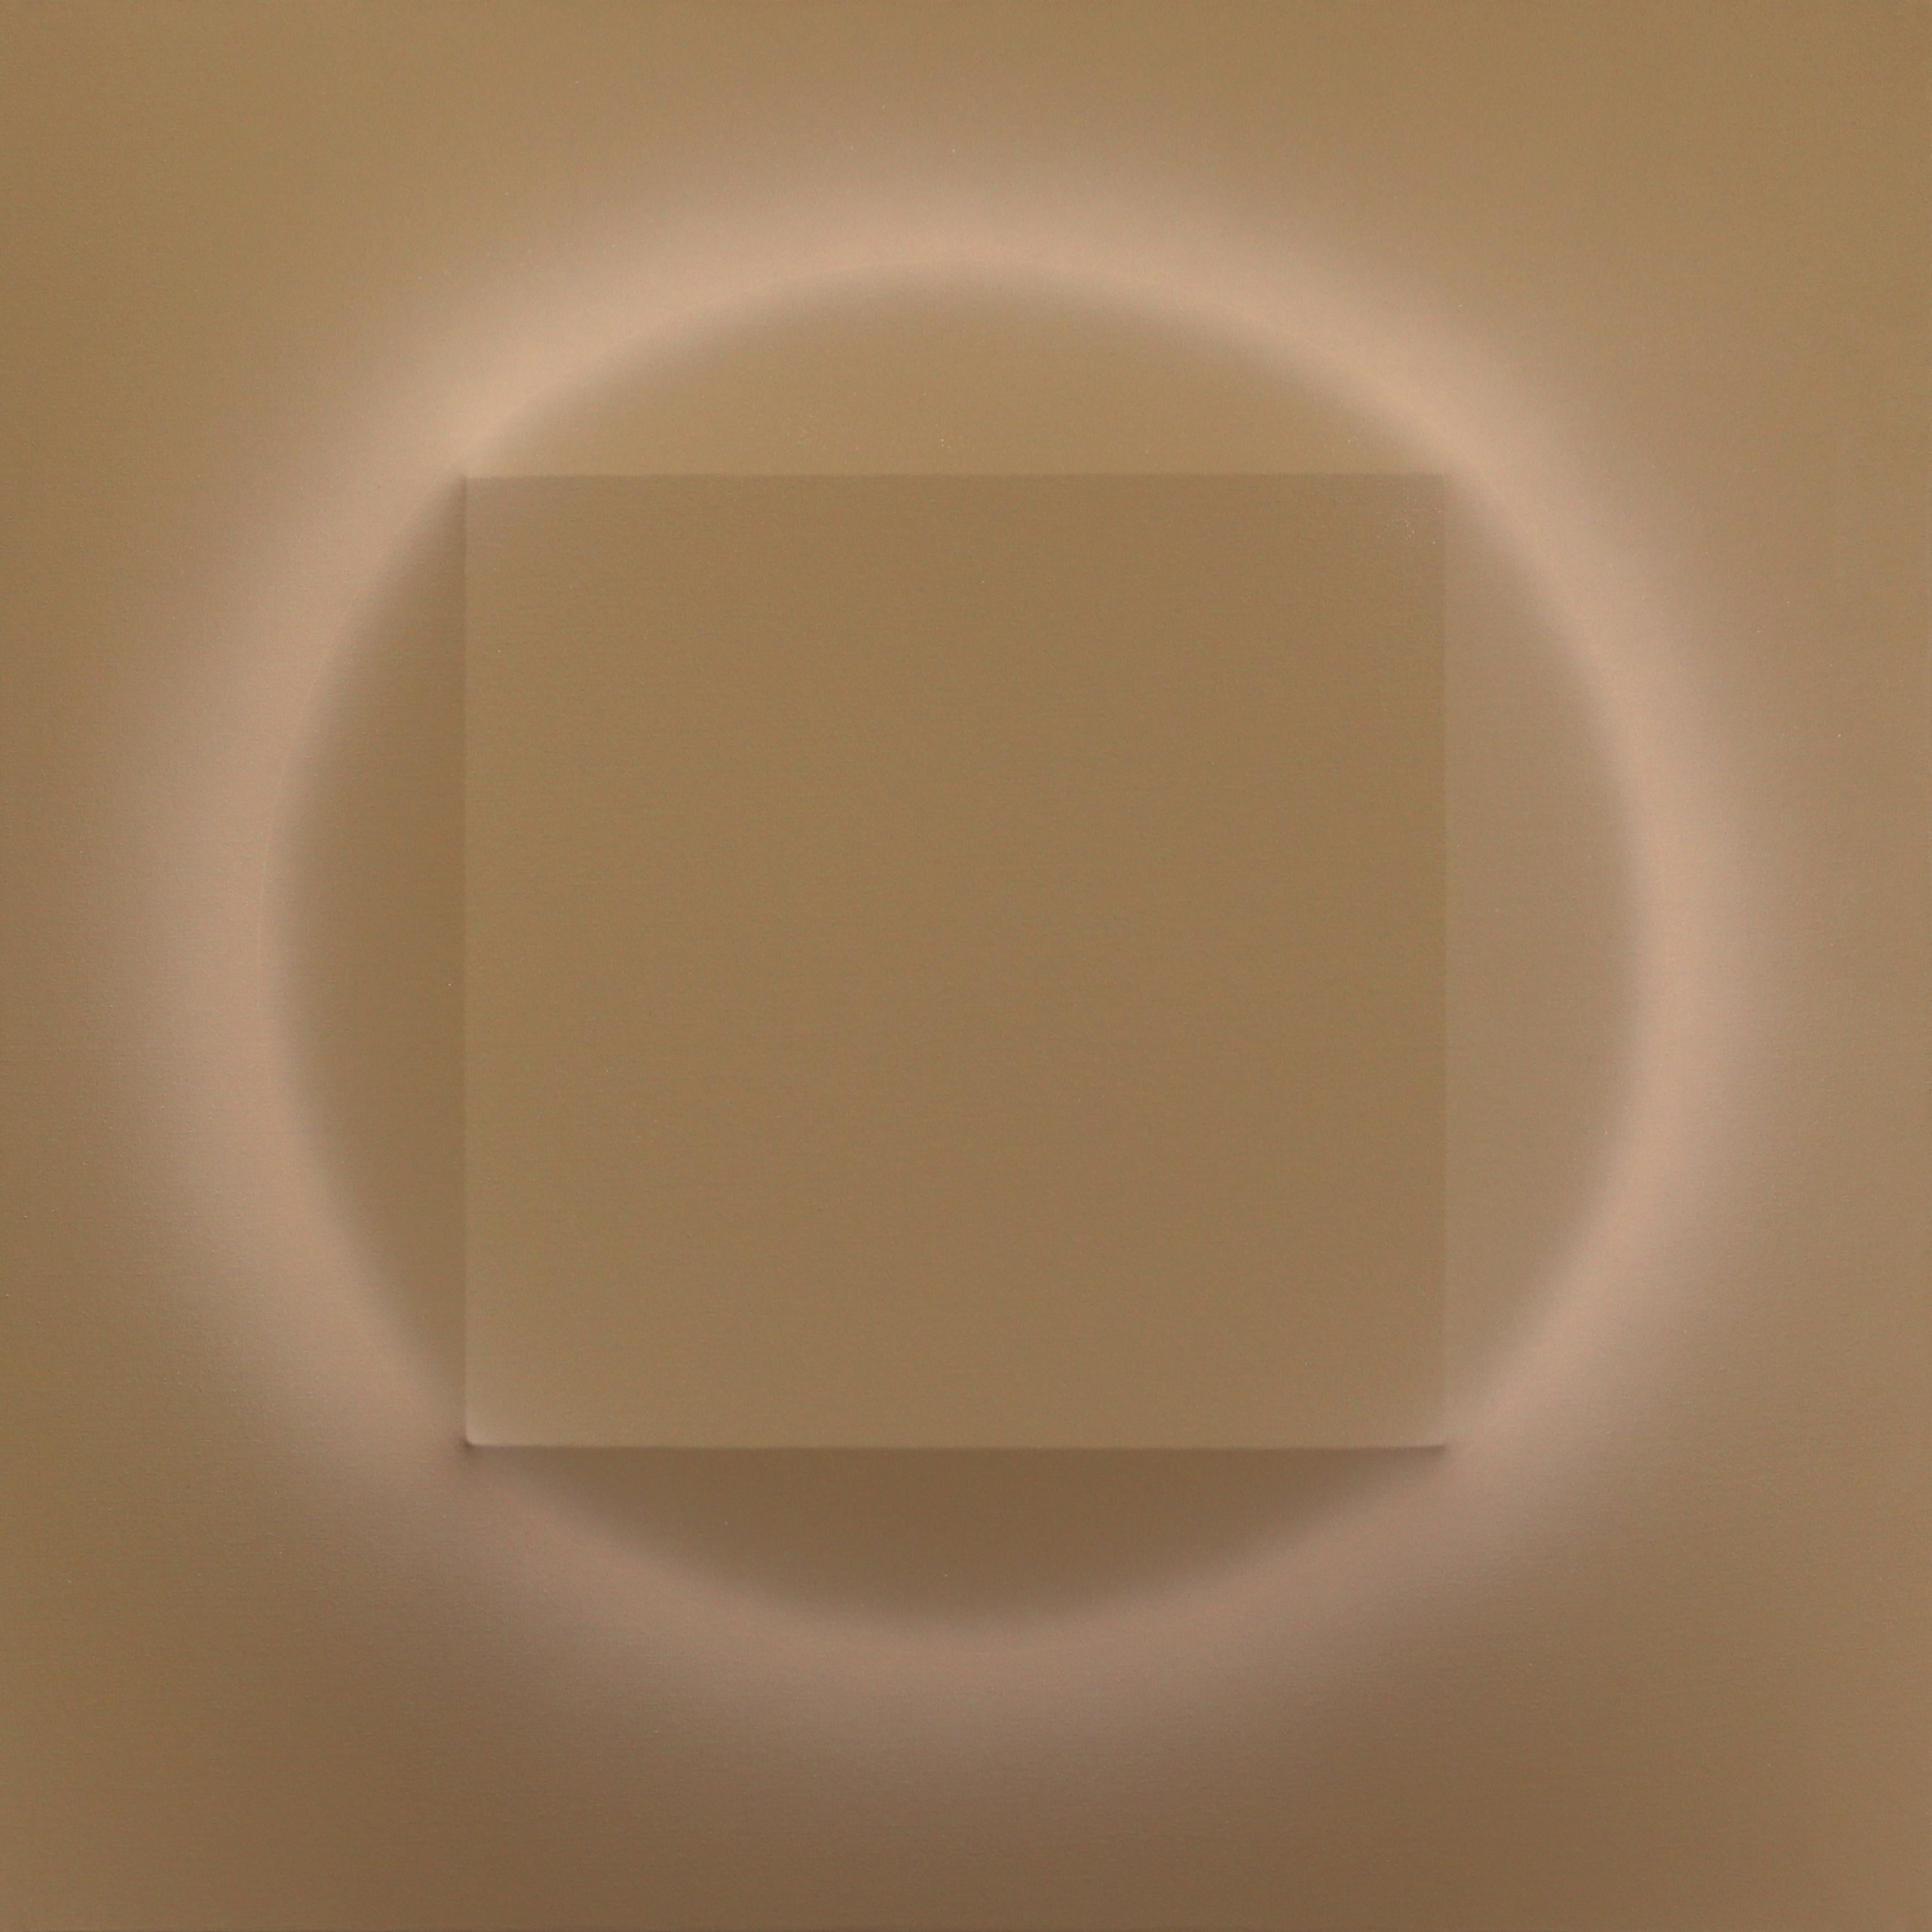 Len Klikunas Abstract Painting – Circle Square 1 Beige auf Tan  Original Abstraktes, minimalistisches, skulpturales Kunstwerk